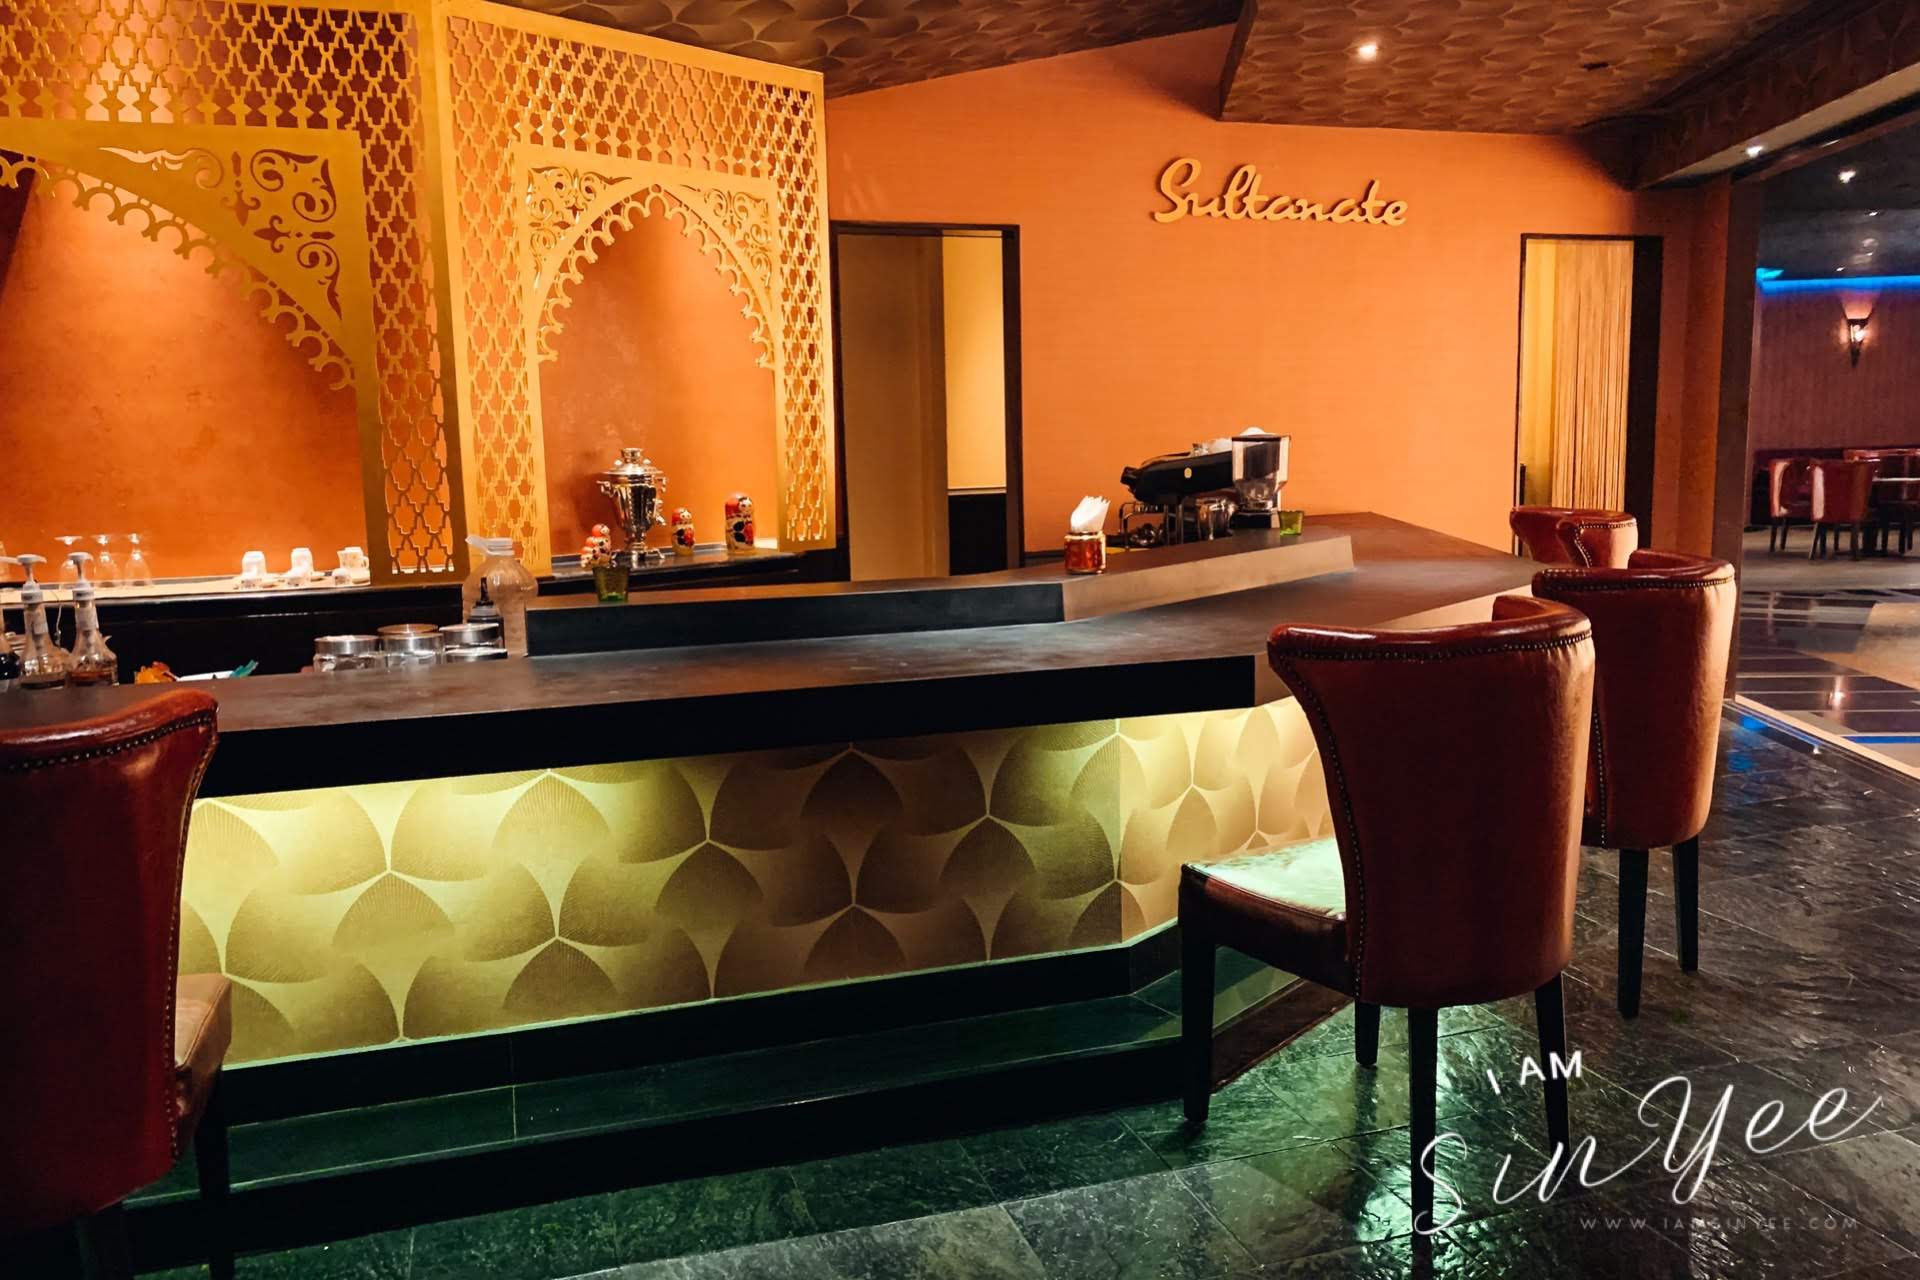 The Sultanate Restaurant Renaissance Hotel